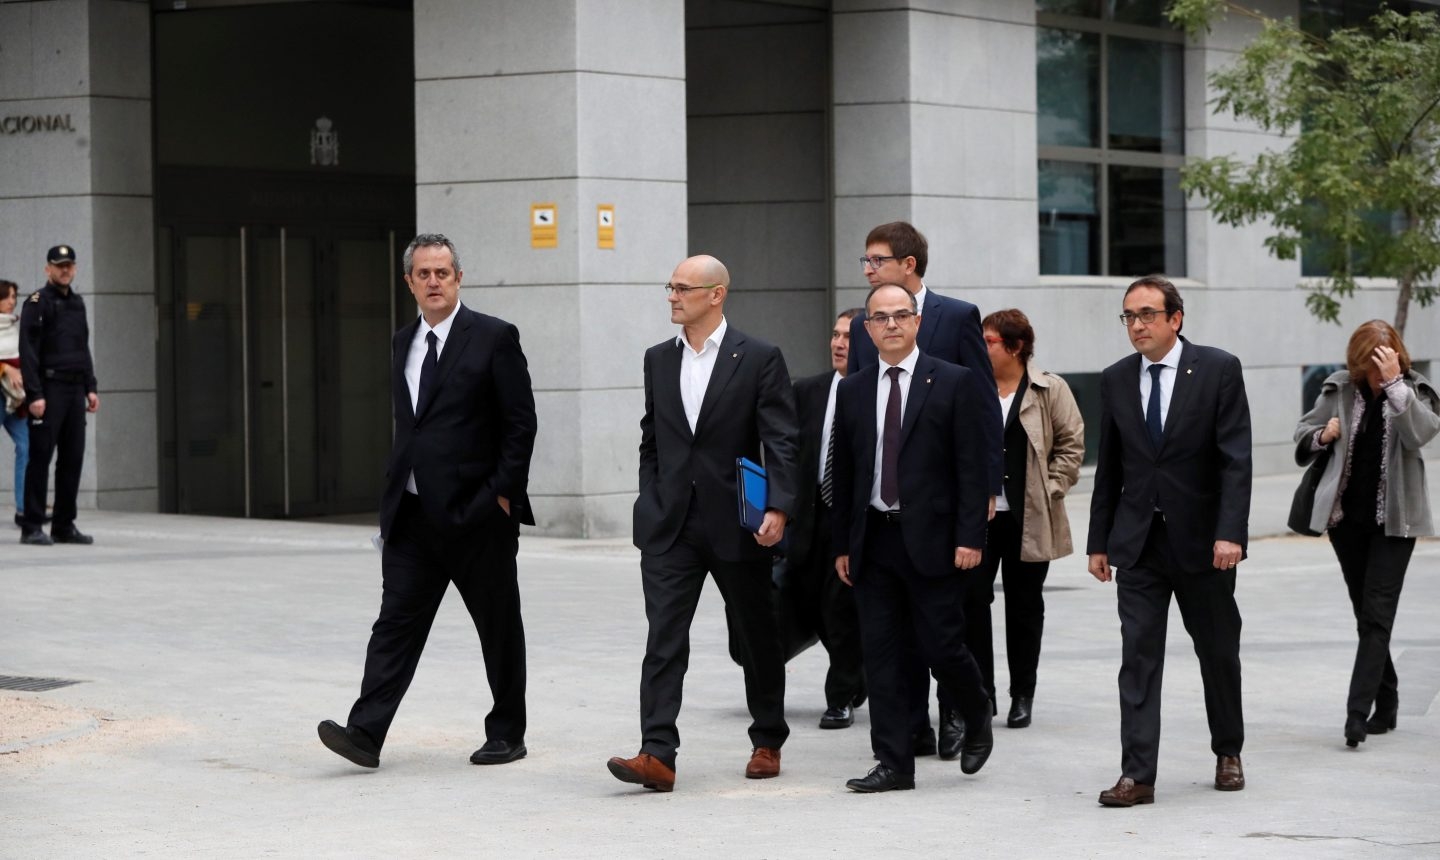 Los ex consejeros Forn, Romeva, Mundó, Turull y Rull llegan a la Audiencia Nacional para declarar ante la magistrada Carmen Lamela.